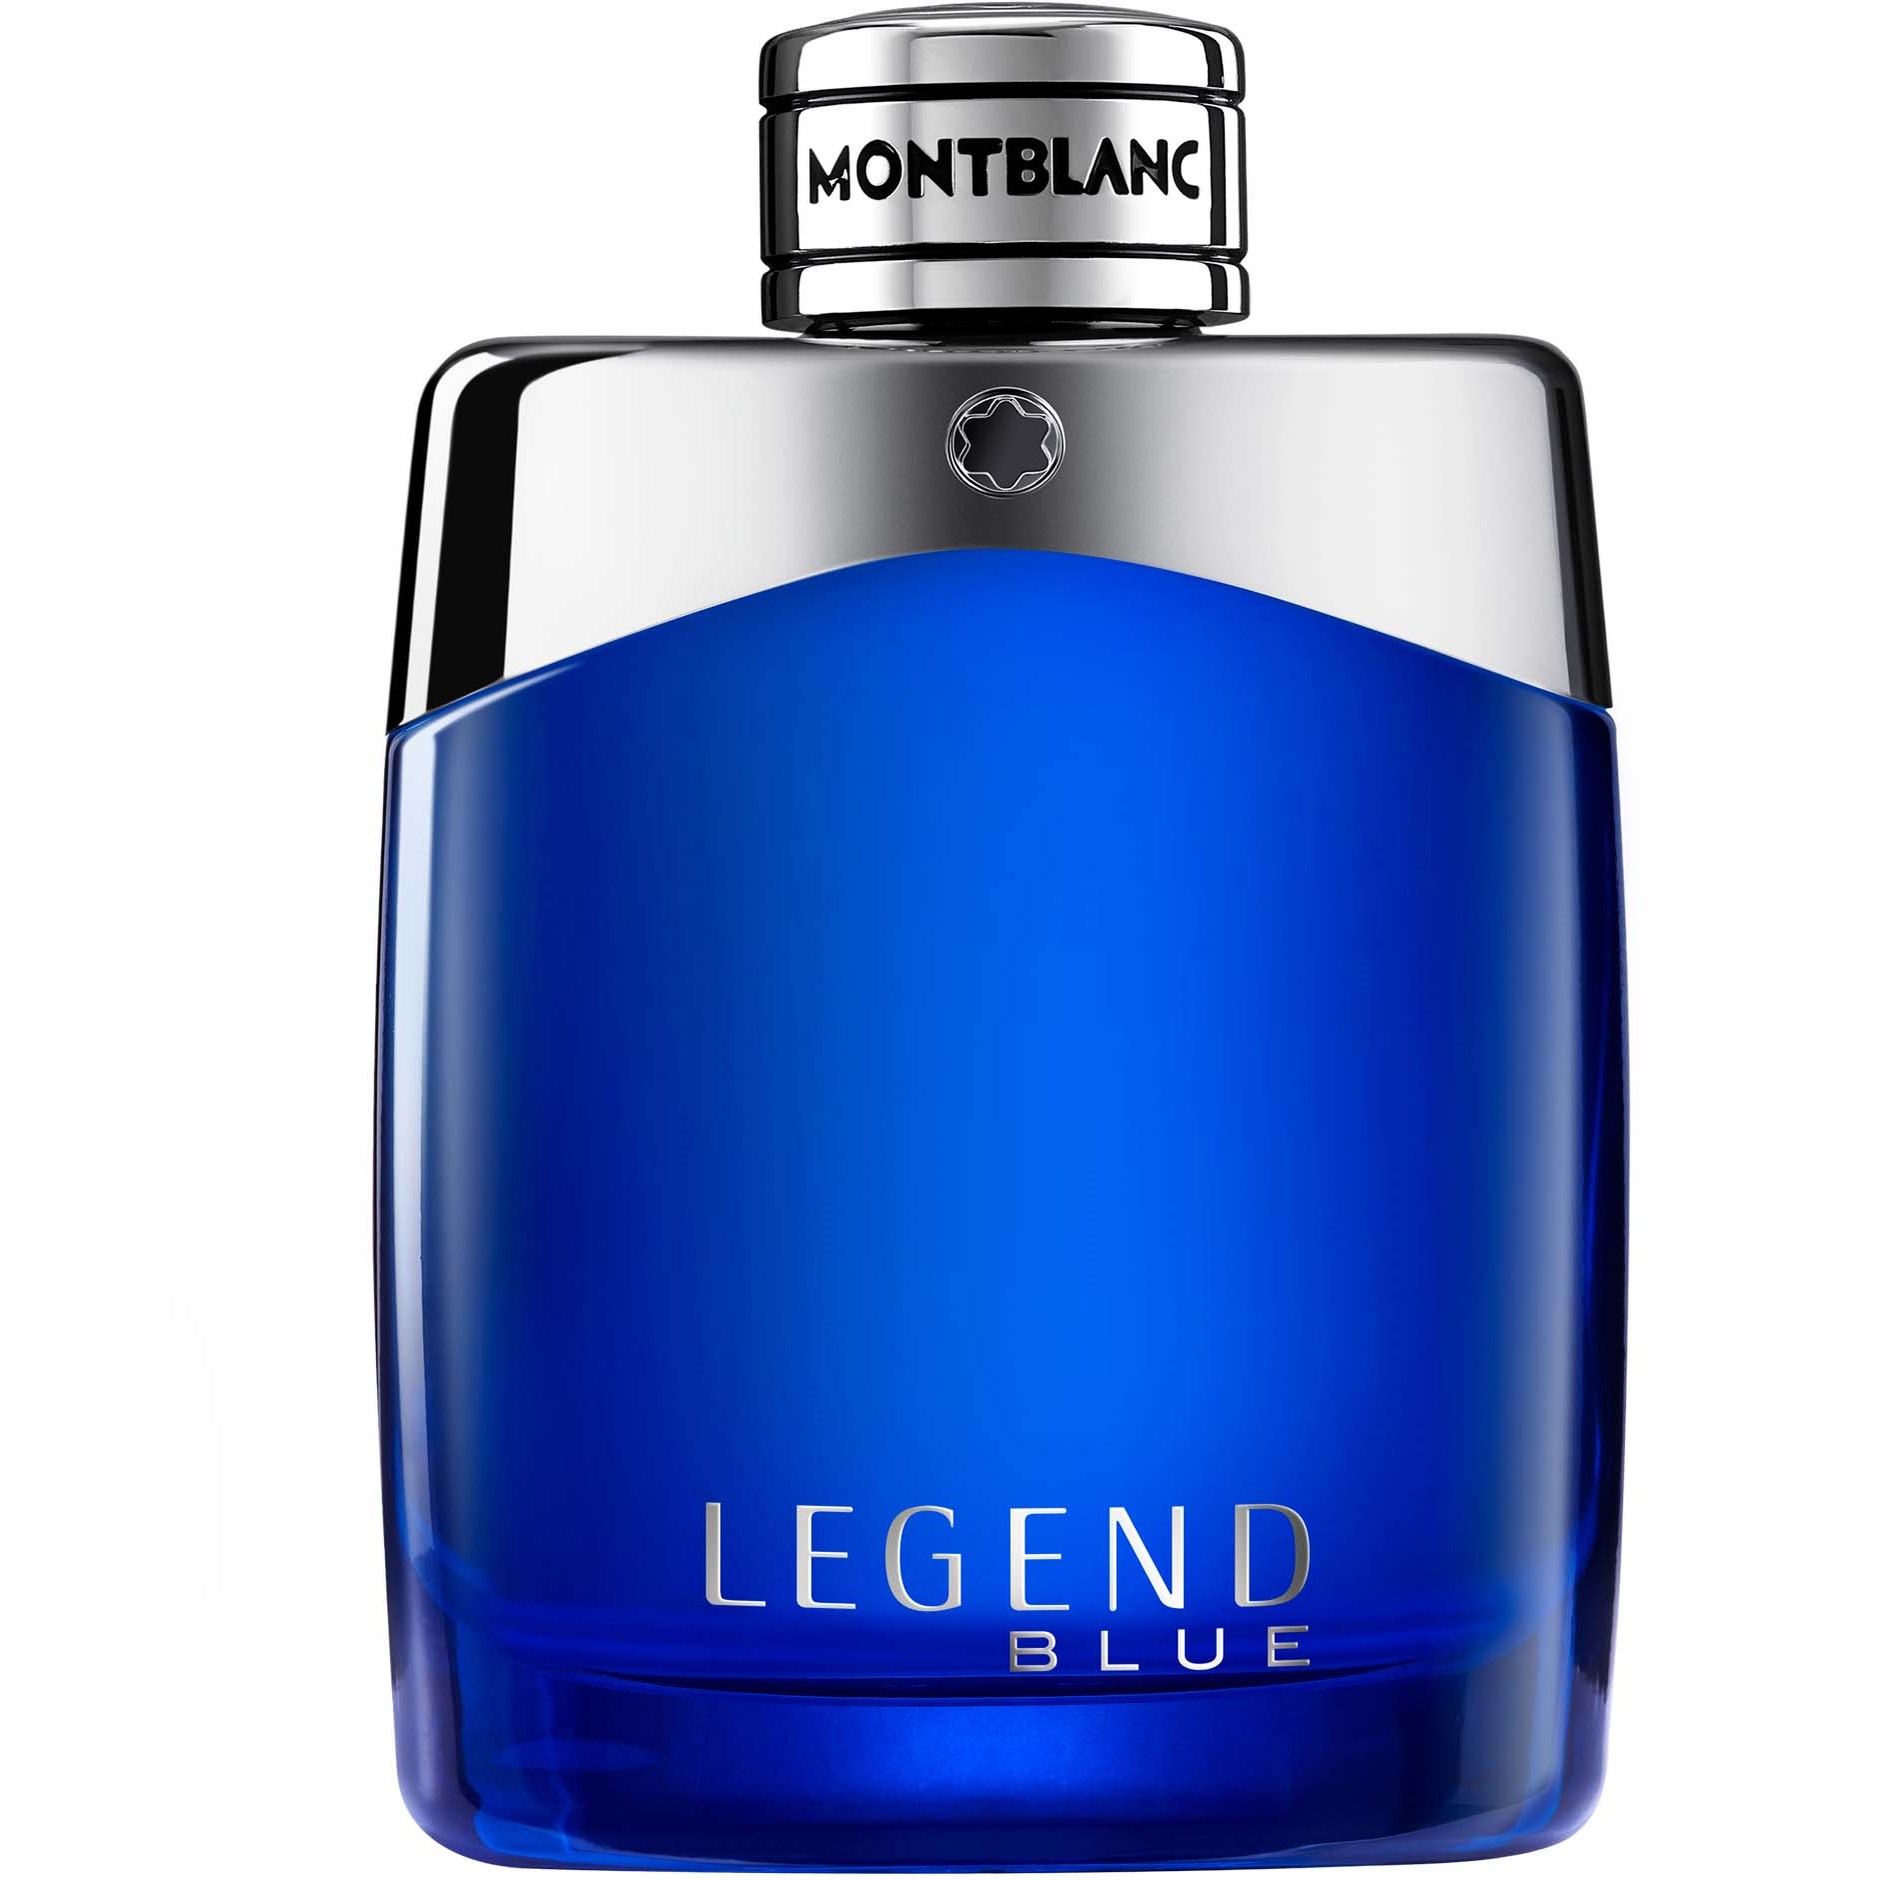 Zdjęcia - Perfuma męska Mont Blanc Montblanc Legend Blue Eau de Parfum 100 ml 